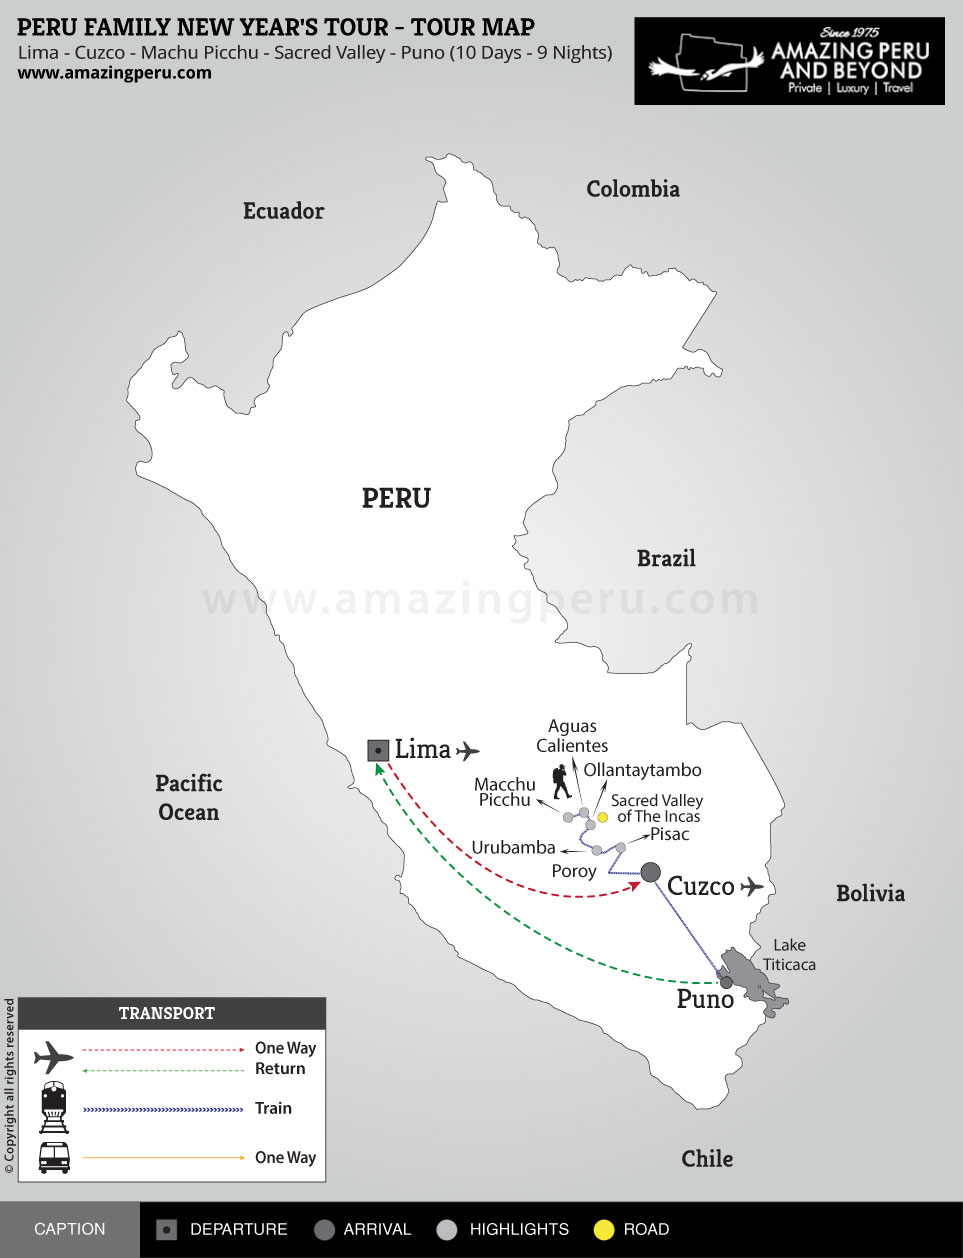 tour map: Peru Family New Year's Tour - 10 days / 9 nights.